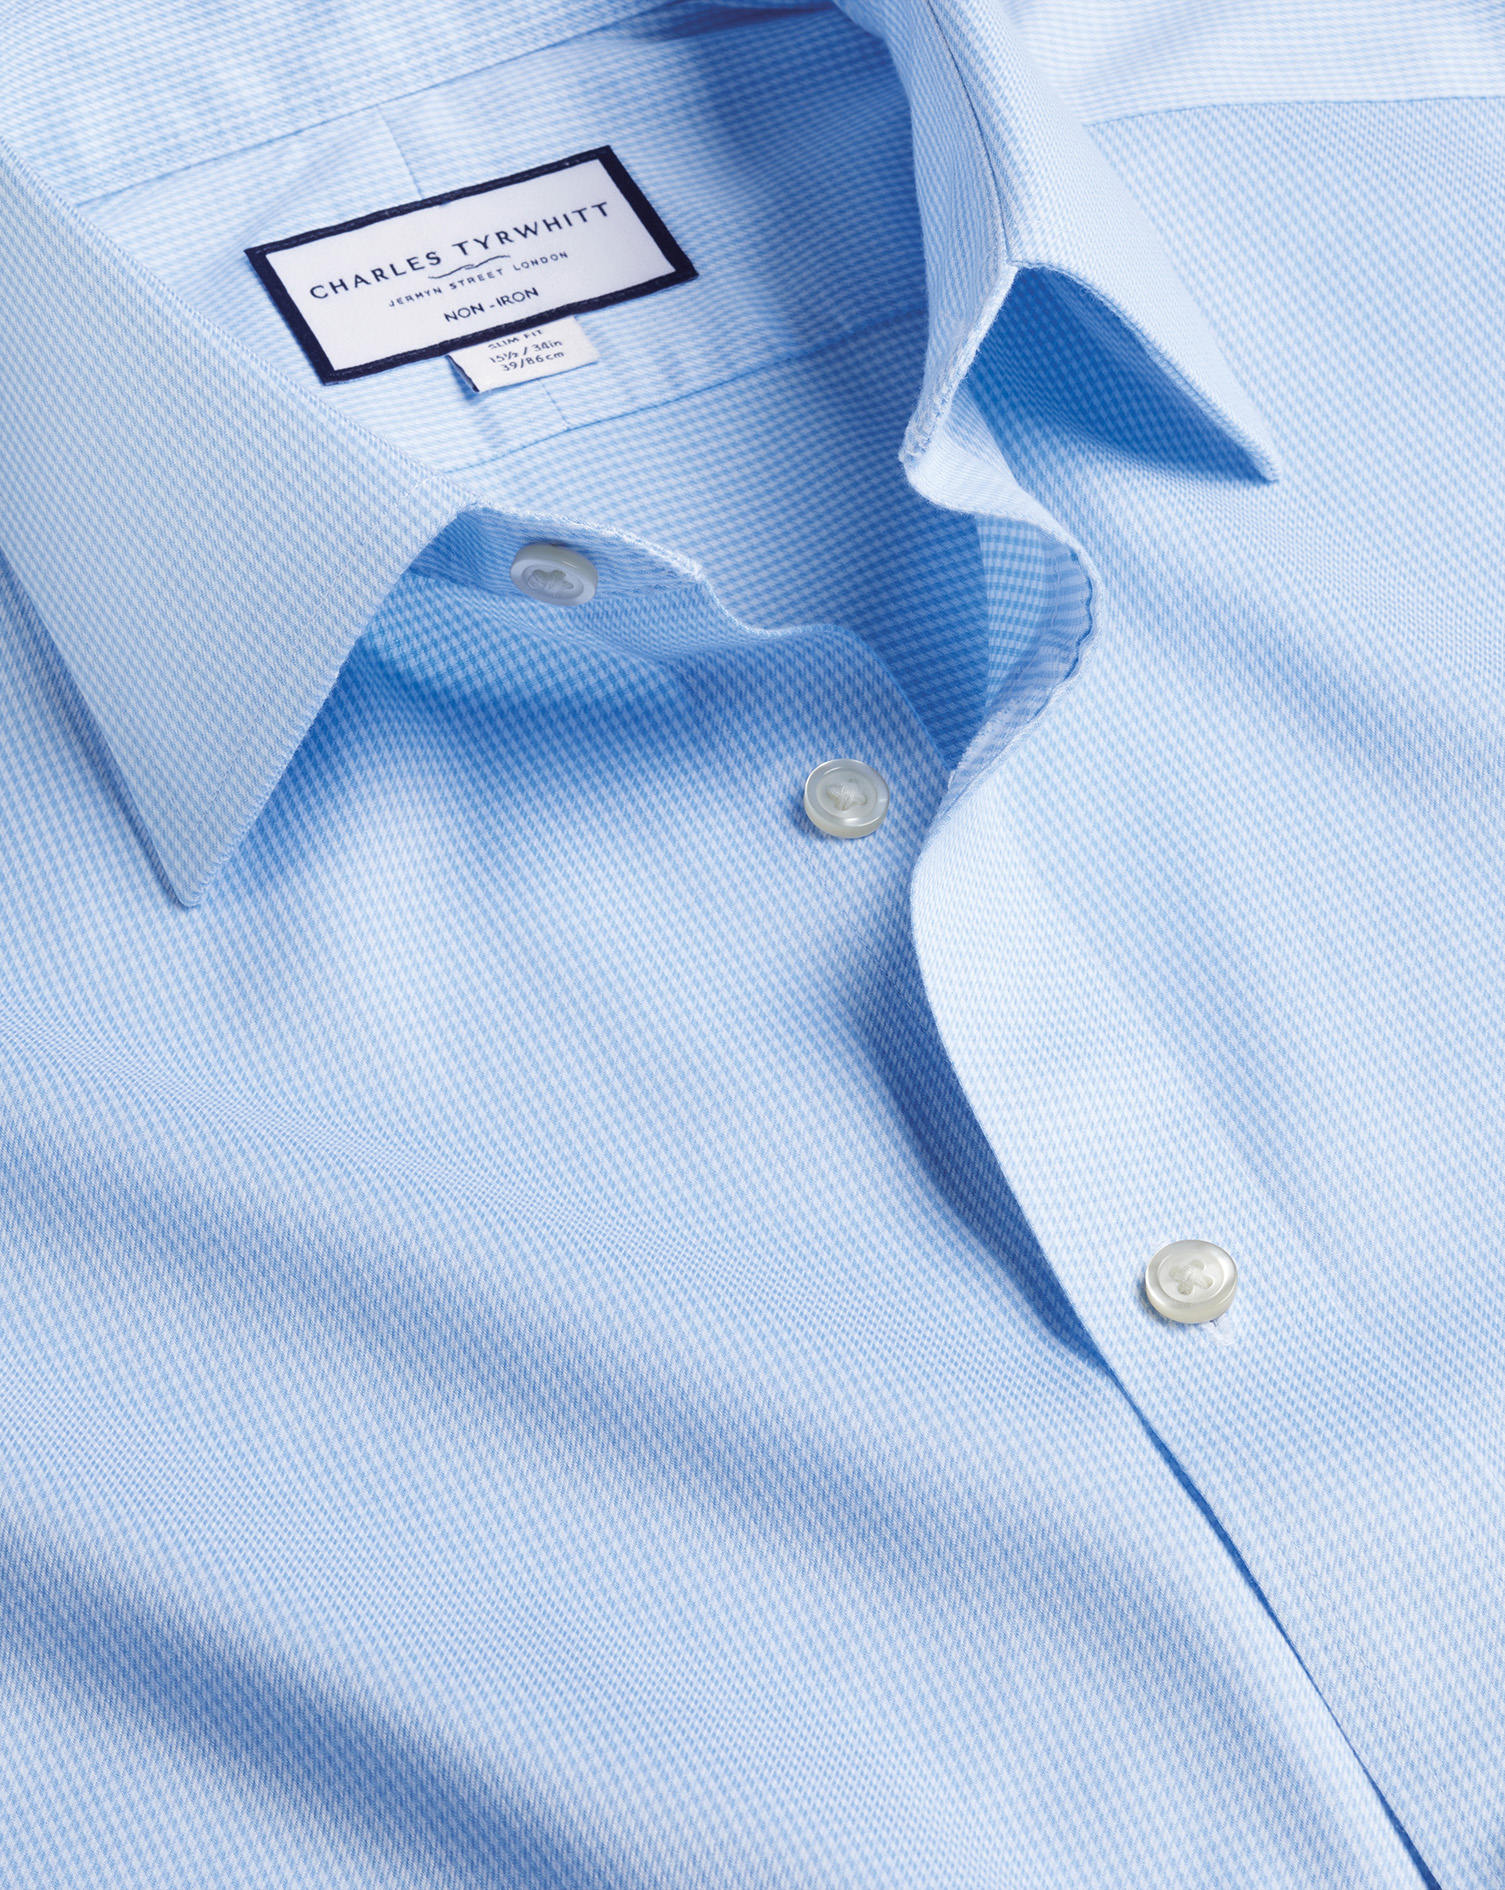 Men's Charles Tyrwhitt Non-Iron Puppytooth Dress Shirt - Sky Blue French Cuff Size Small Cotton
